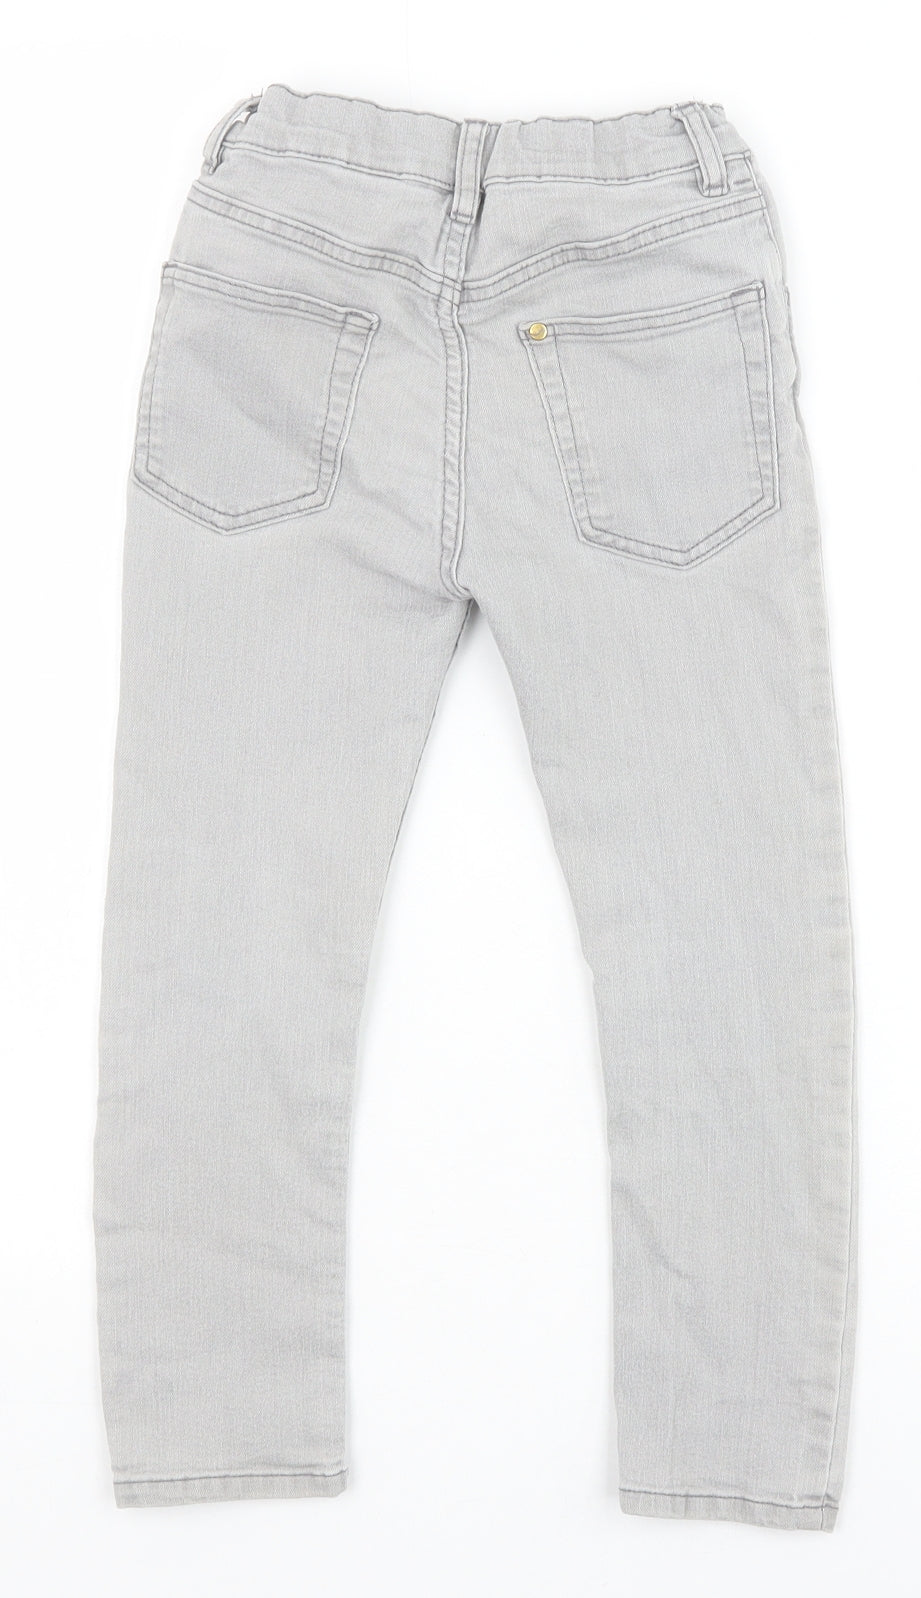 H&M Girls Grey Cotton Skinny Jeans Size 5-6 Years Slim Zip